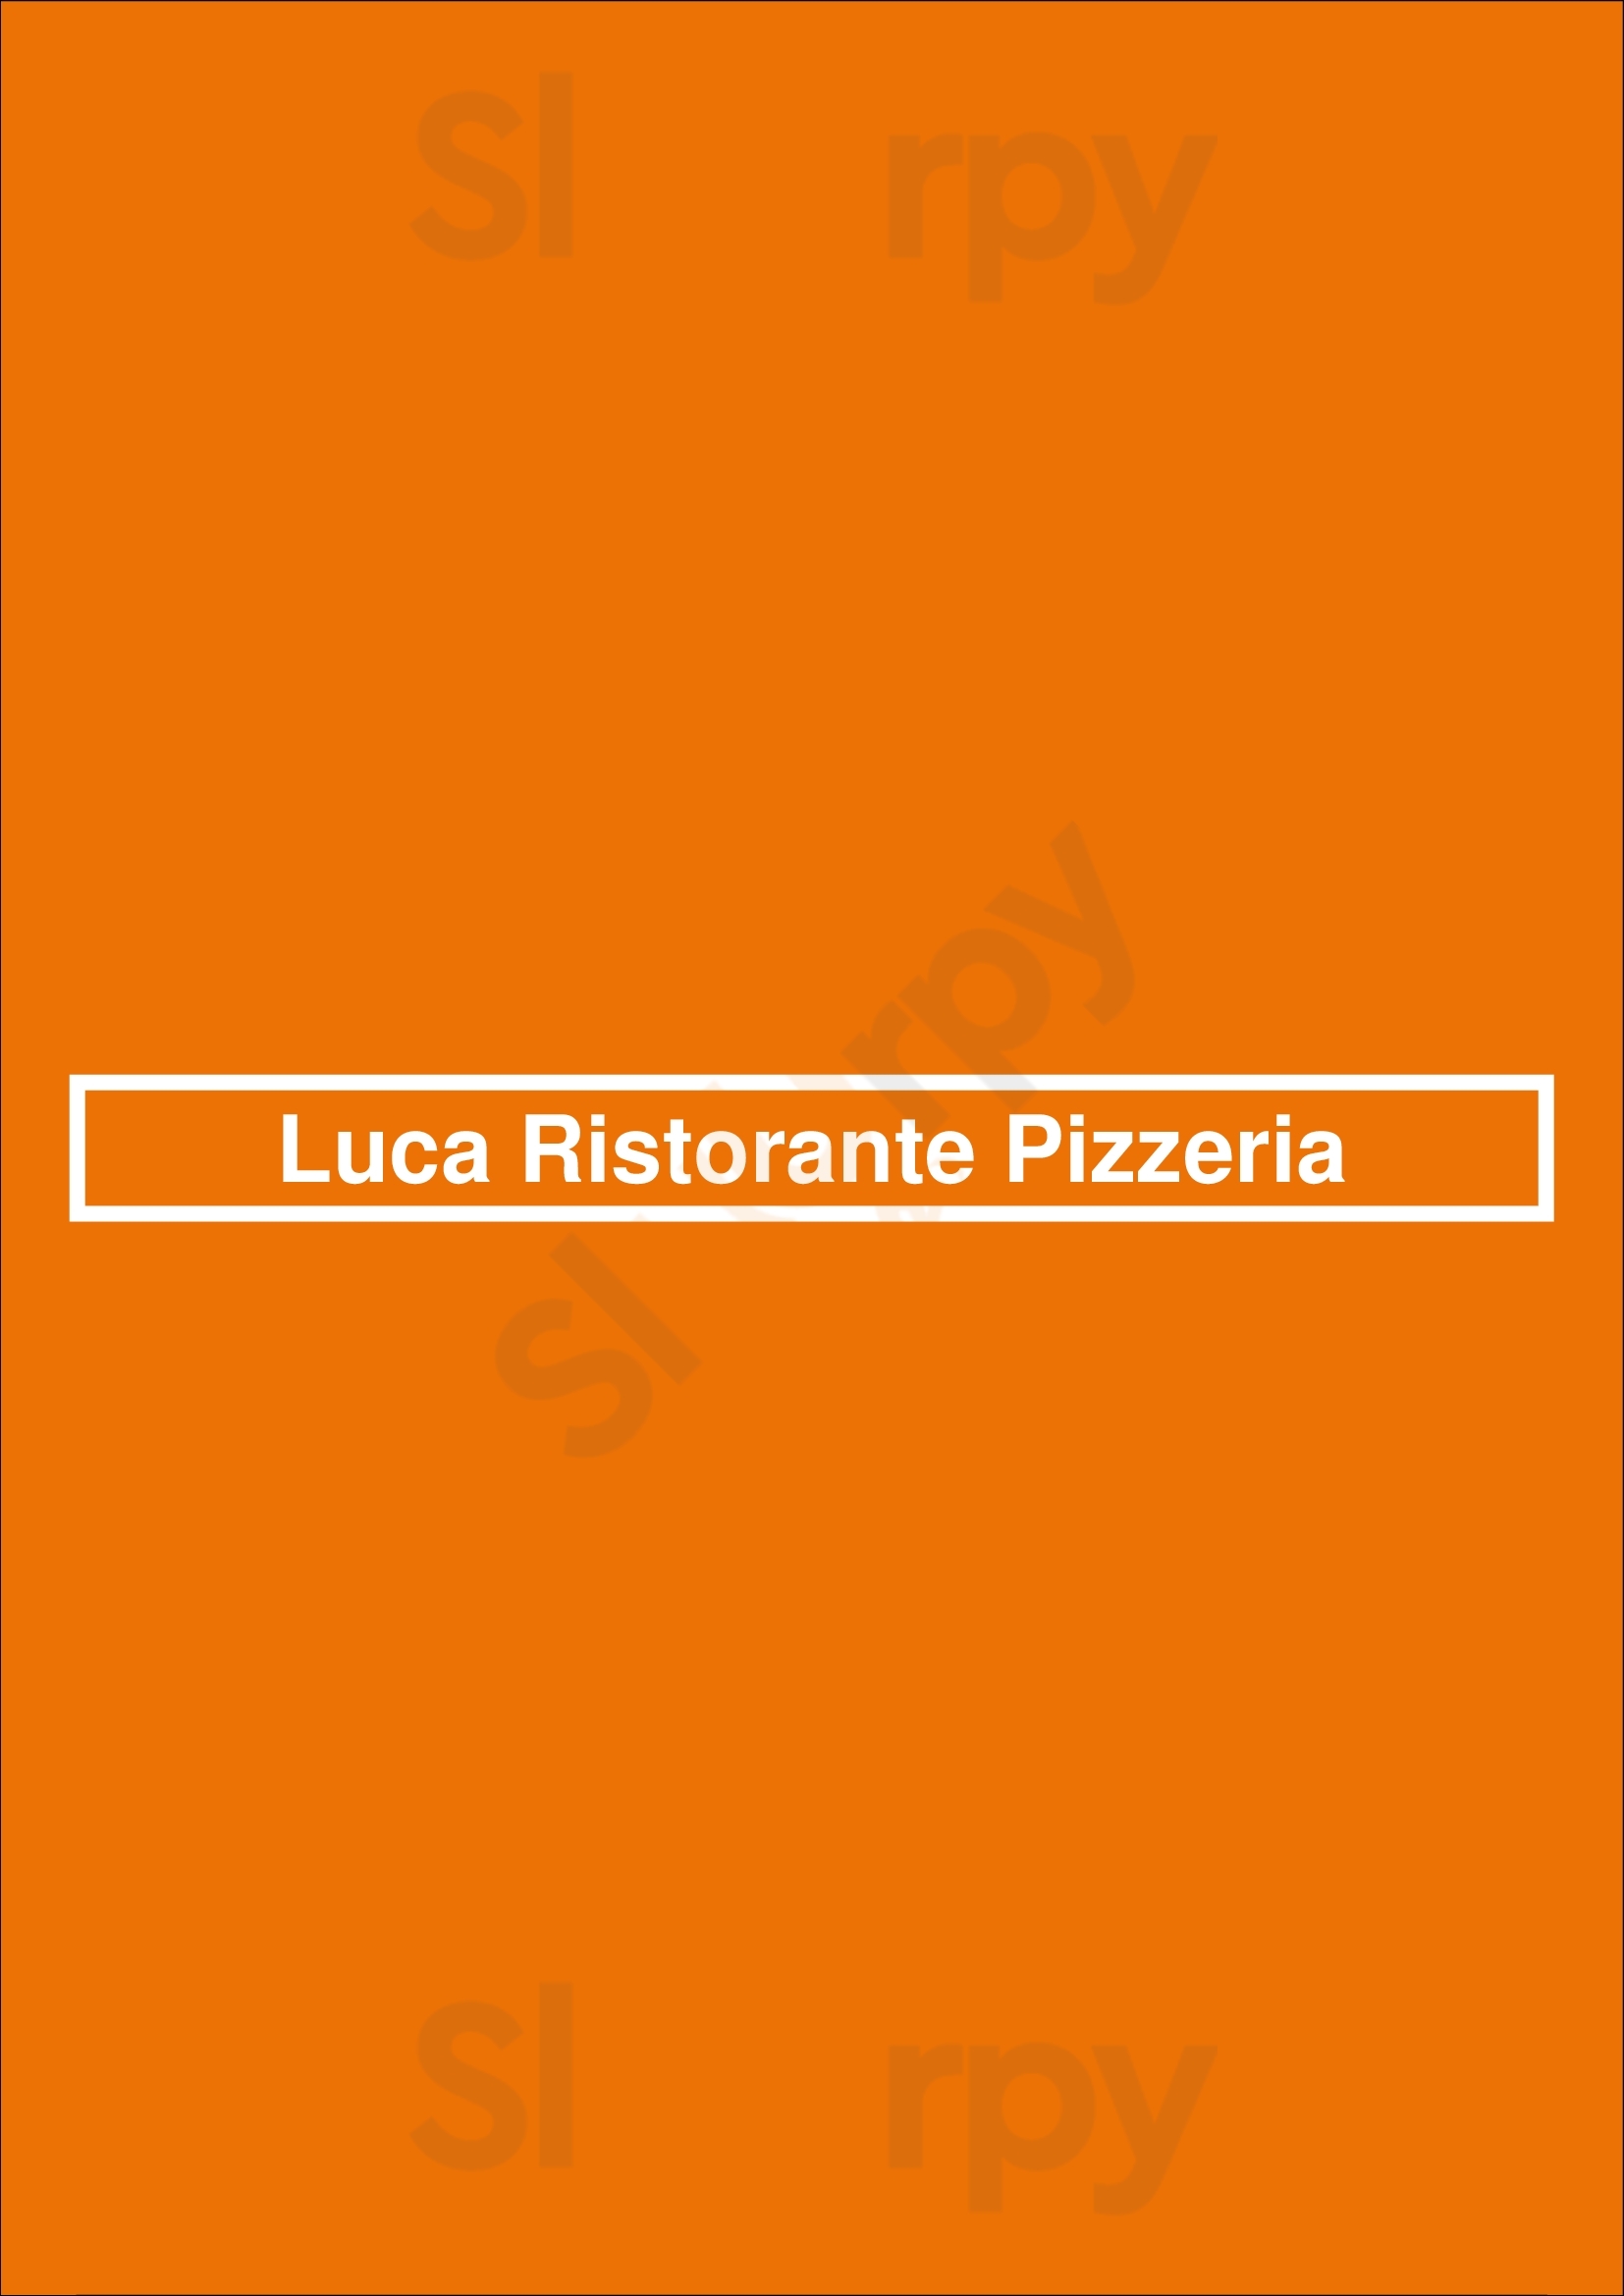 Luca Ristorante Pizzeria Haarlem Menu - 1